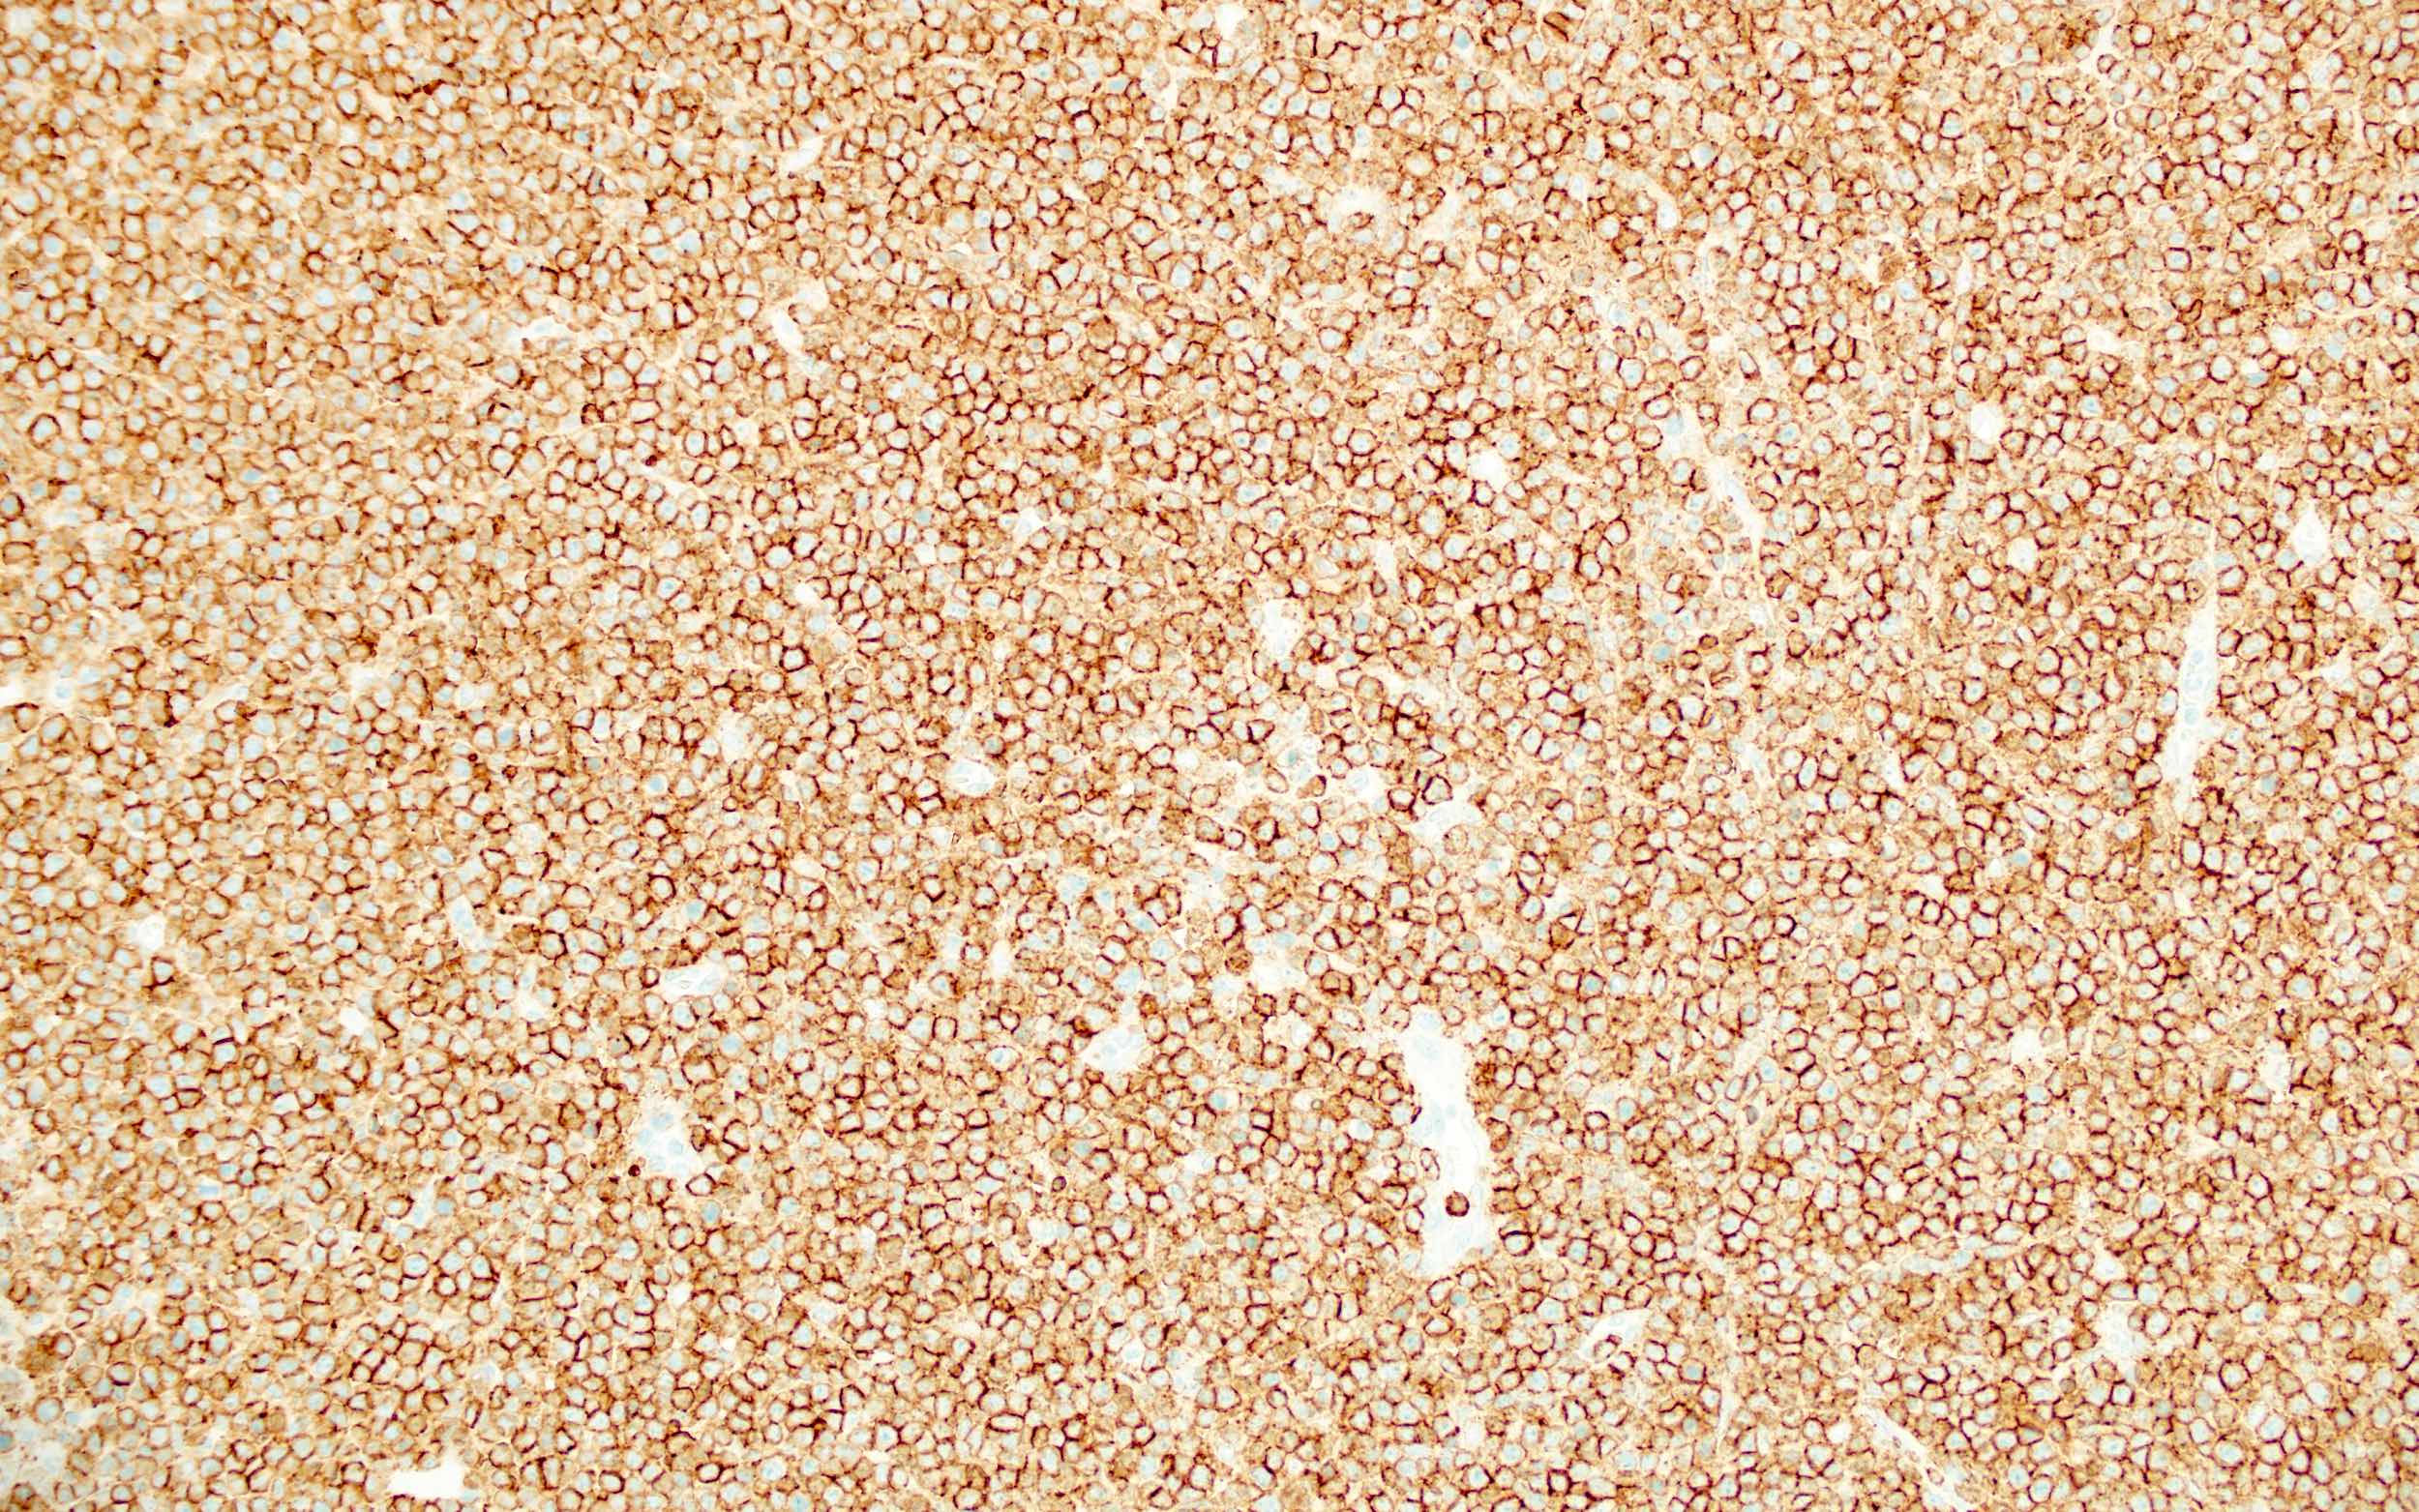 Burkitt lymphoma cells, CD20+